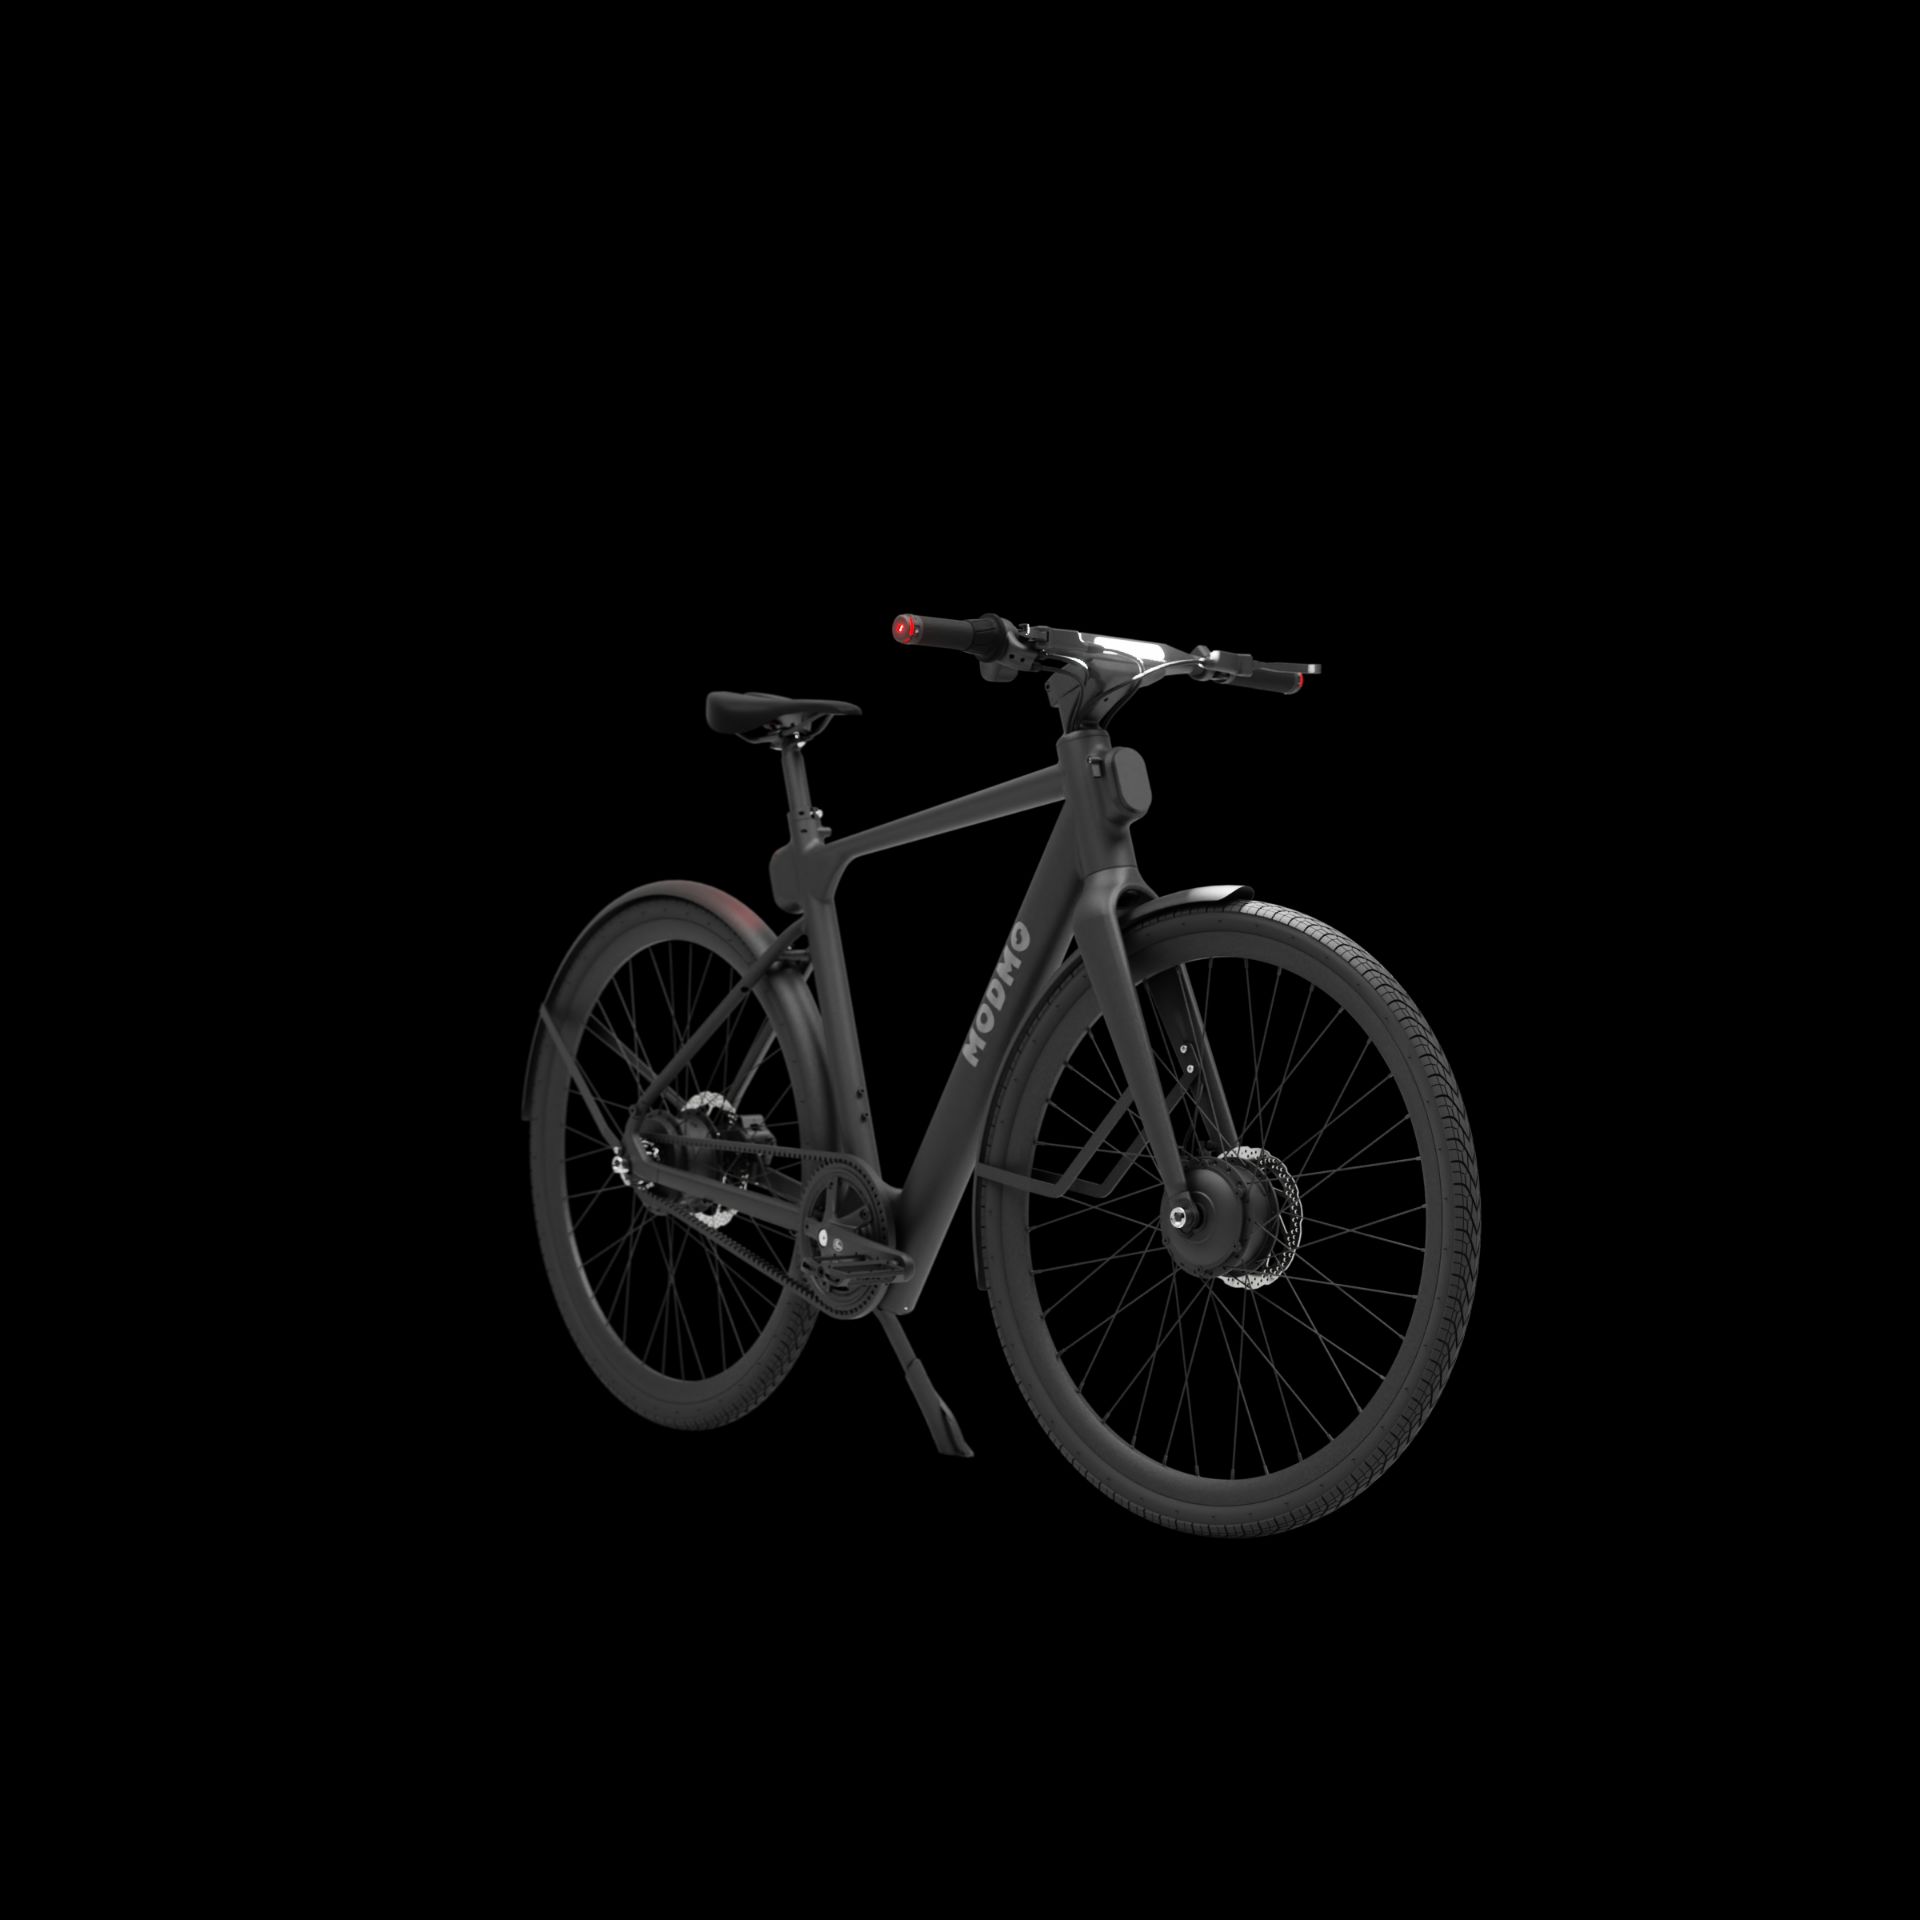 Modmo Saigon+ Electric Bicycle - RRP £2800 - Size L (Rider 175-190cm) - Image 2 of 12